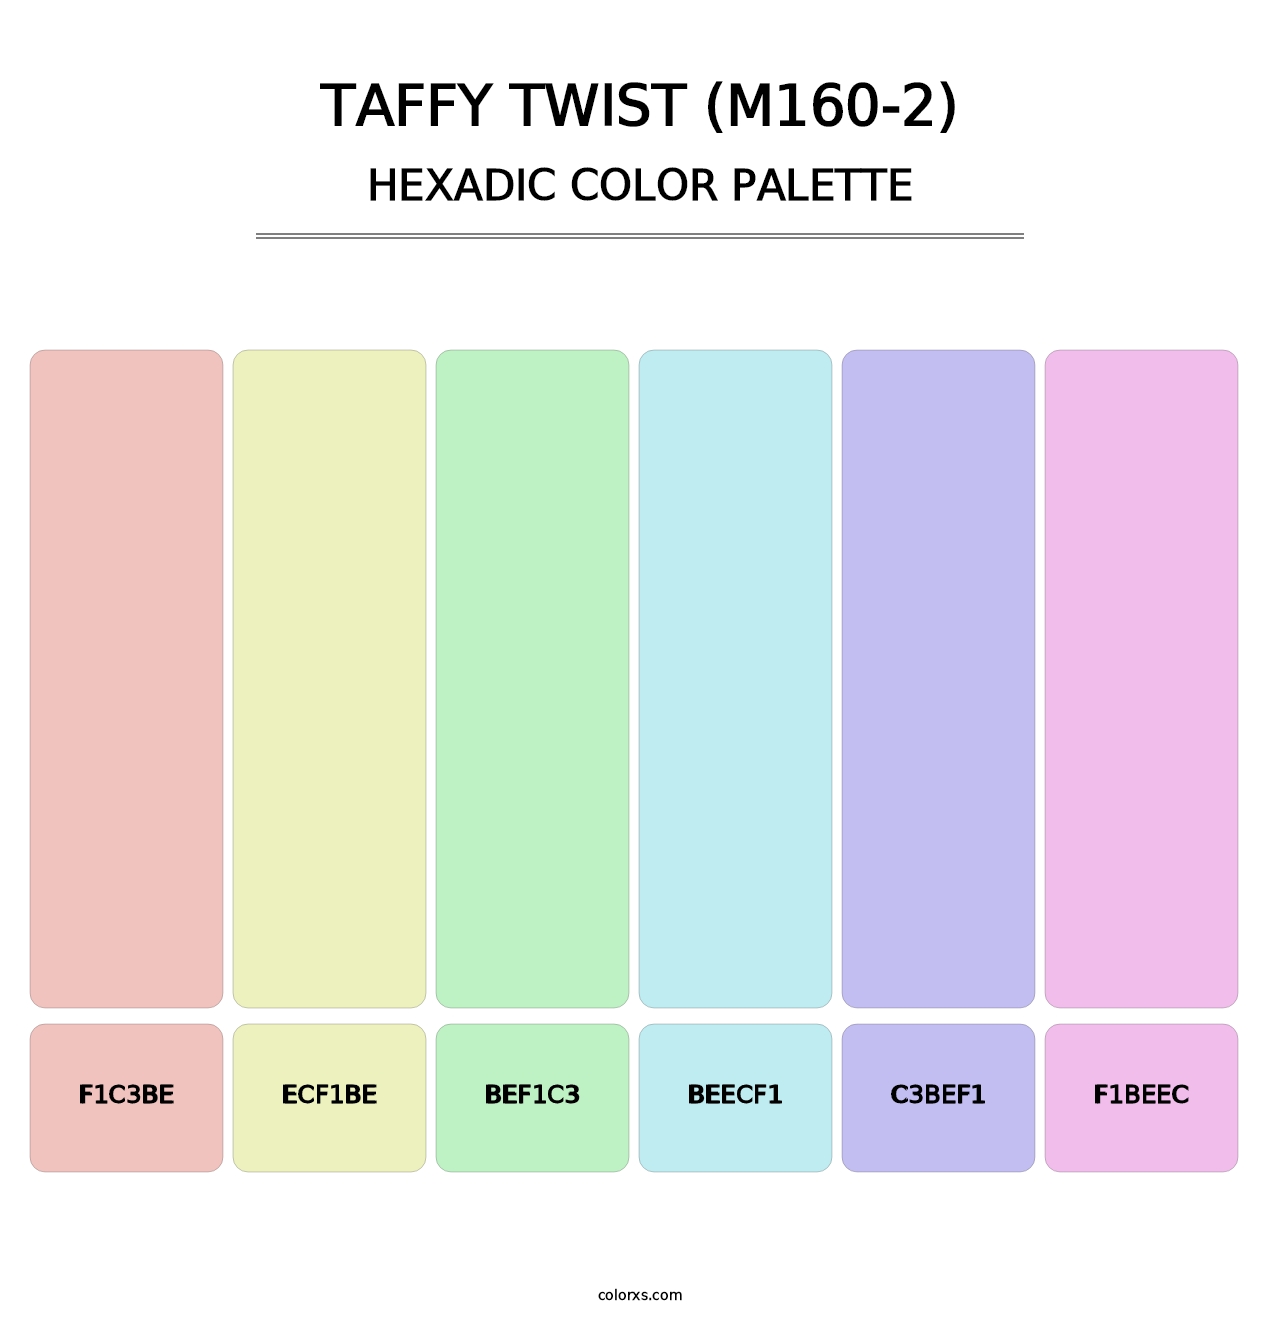 Taffy Twist (M160-2) - Hexadic Color Palette